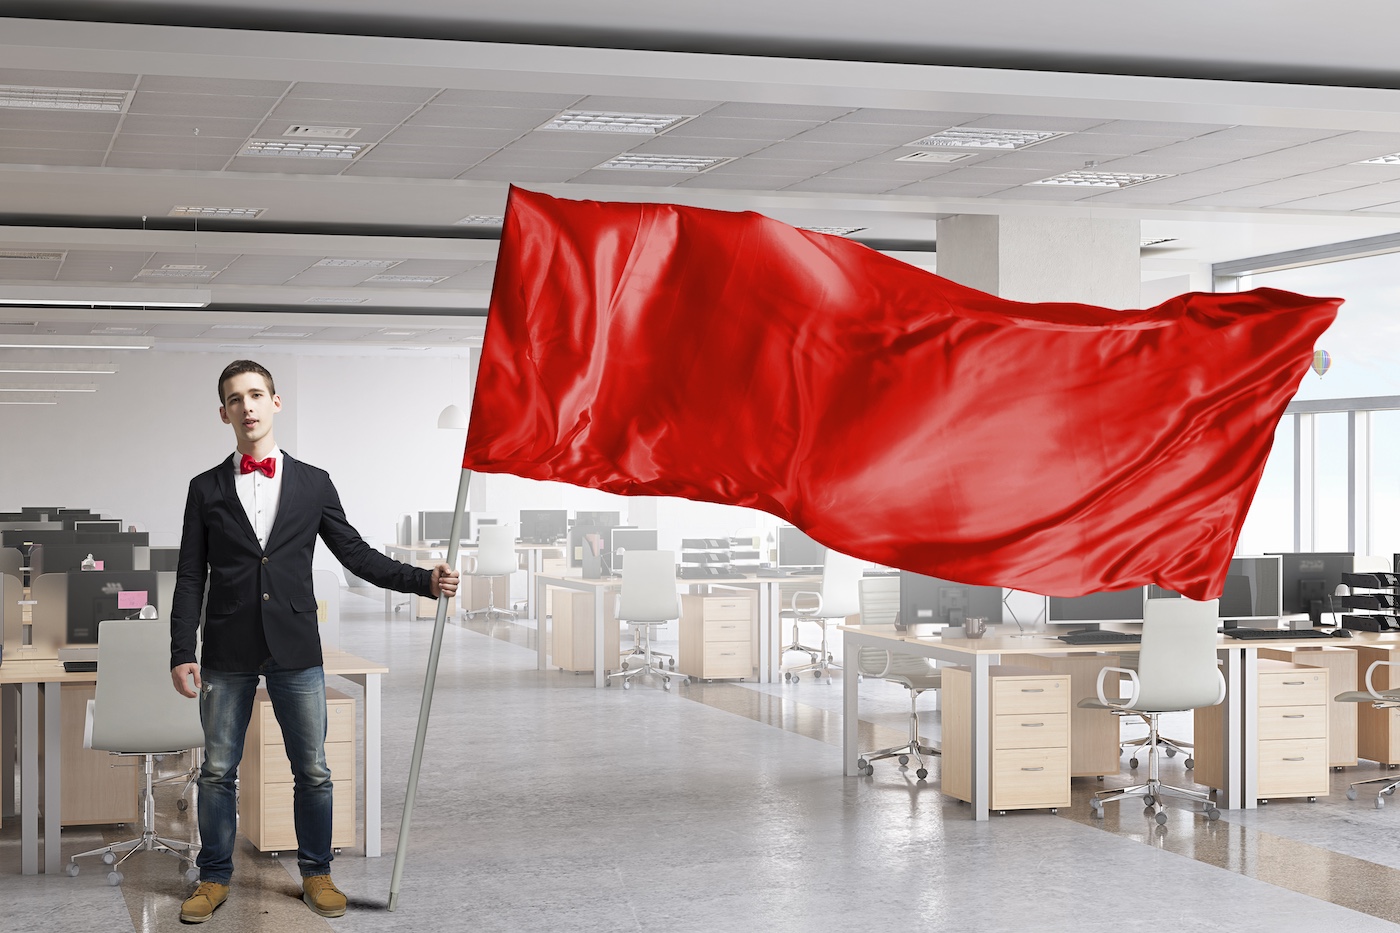 Man waving red flag warning at empty tech company